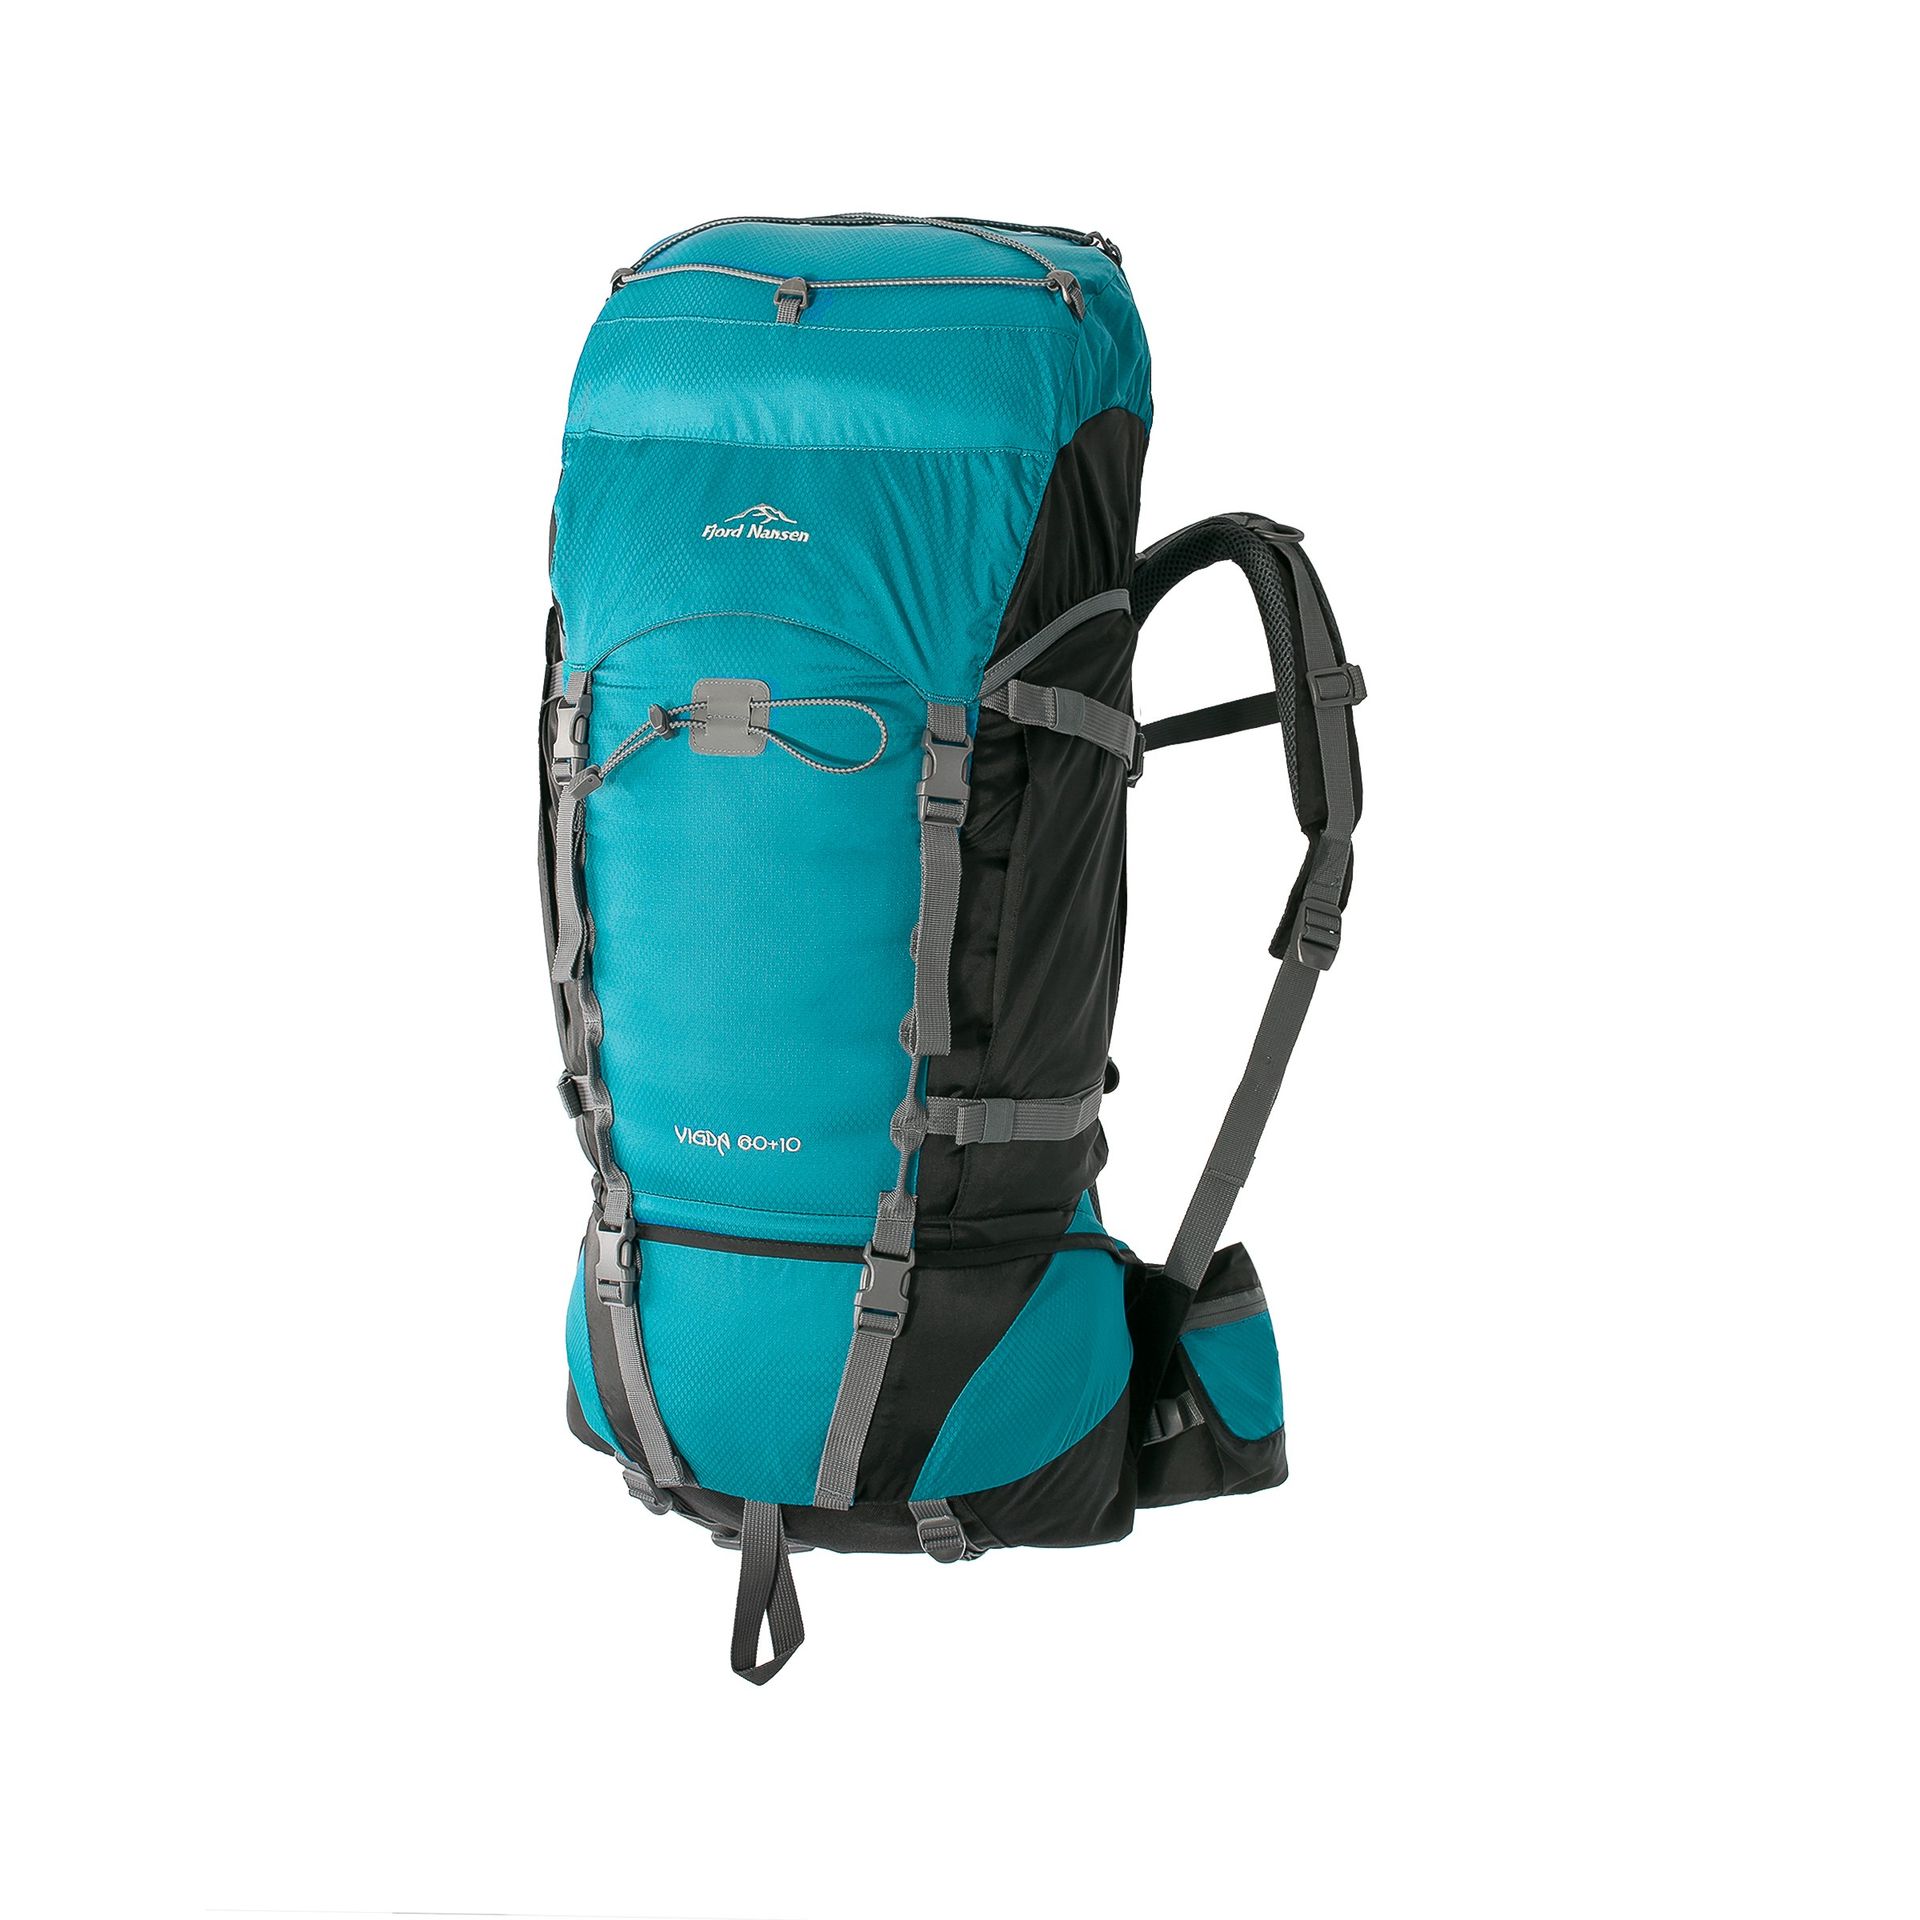 fjord-nansen-backpack-vigda-6010-nejpg